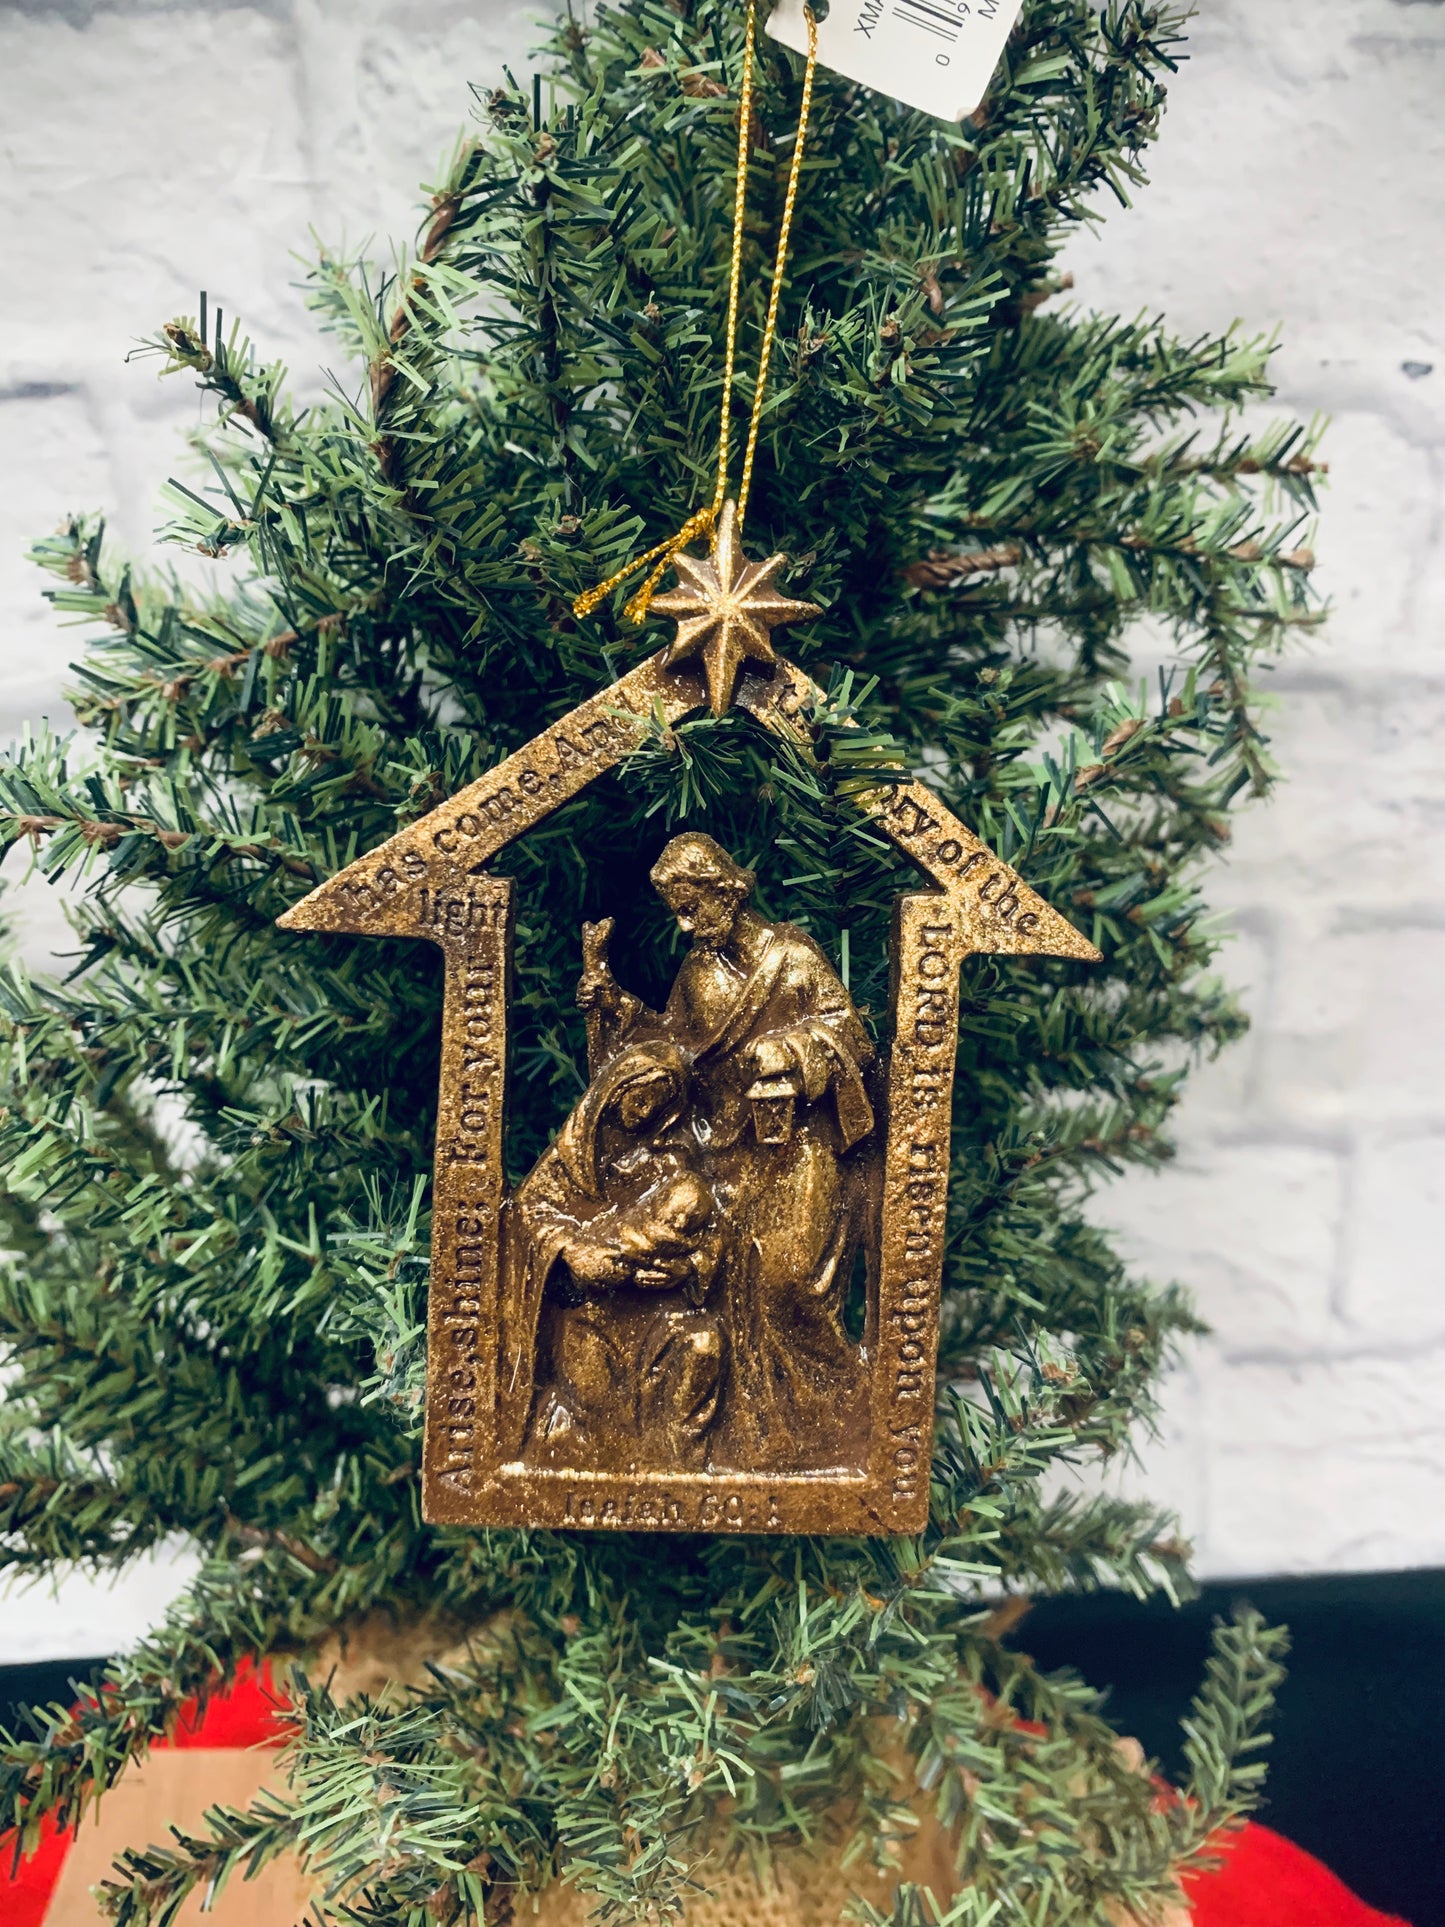 Nativity Scene Ornament